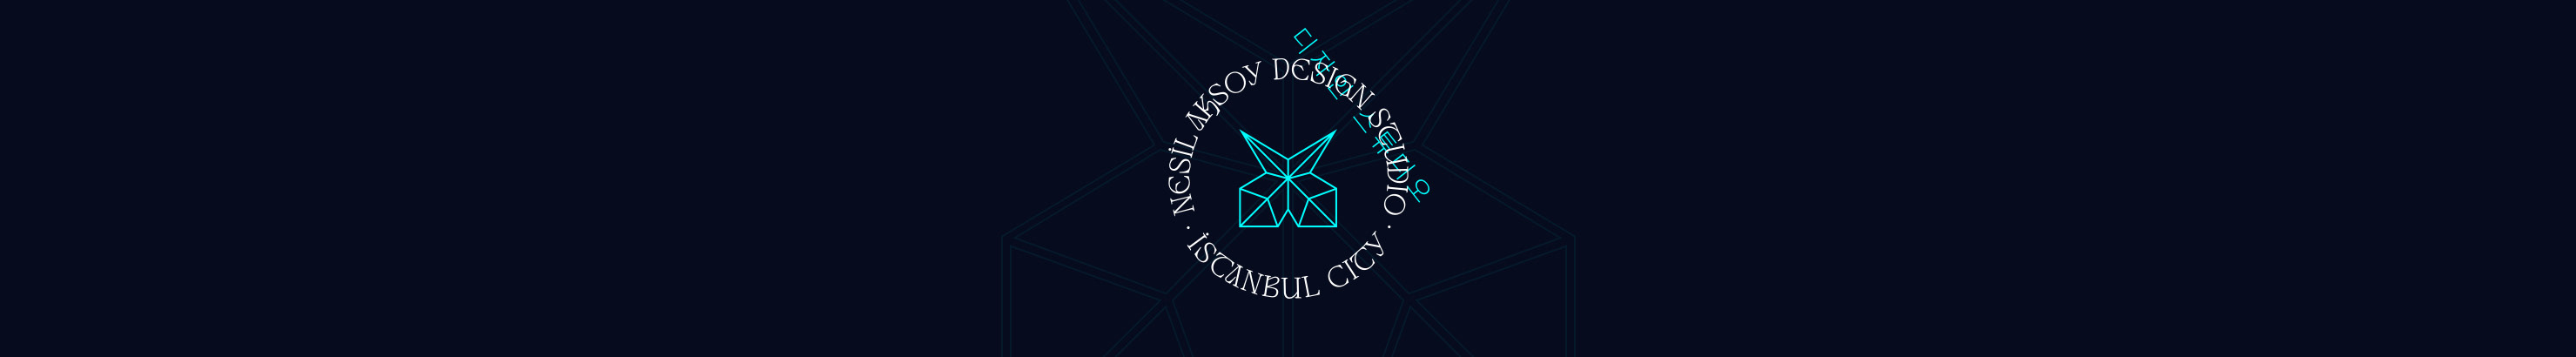 Nesil AKSOY's profile banner